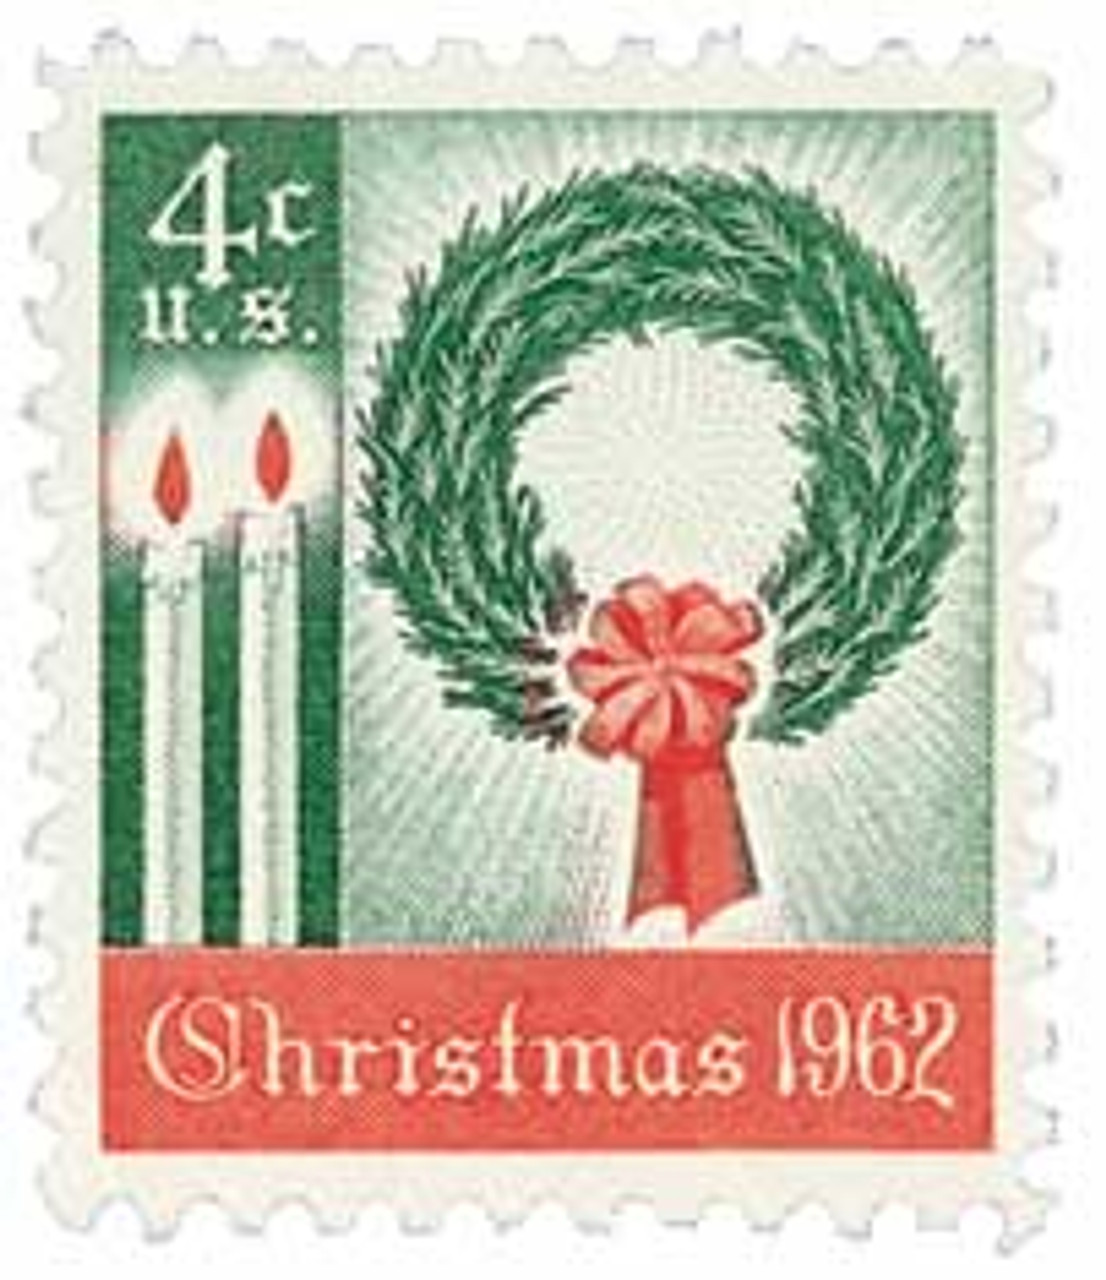 Scm-169 Medium Round Stamp - Christmas Star